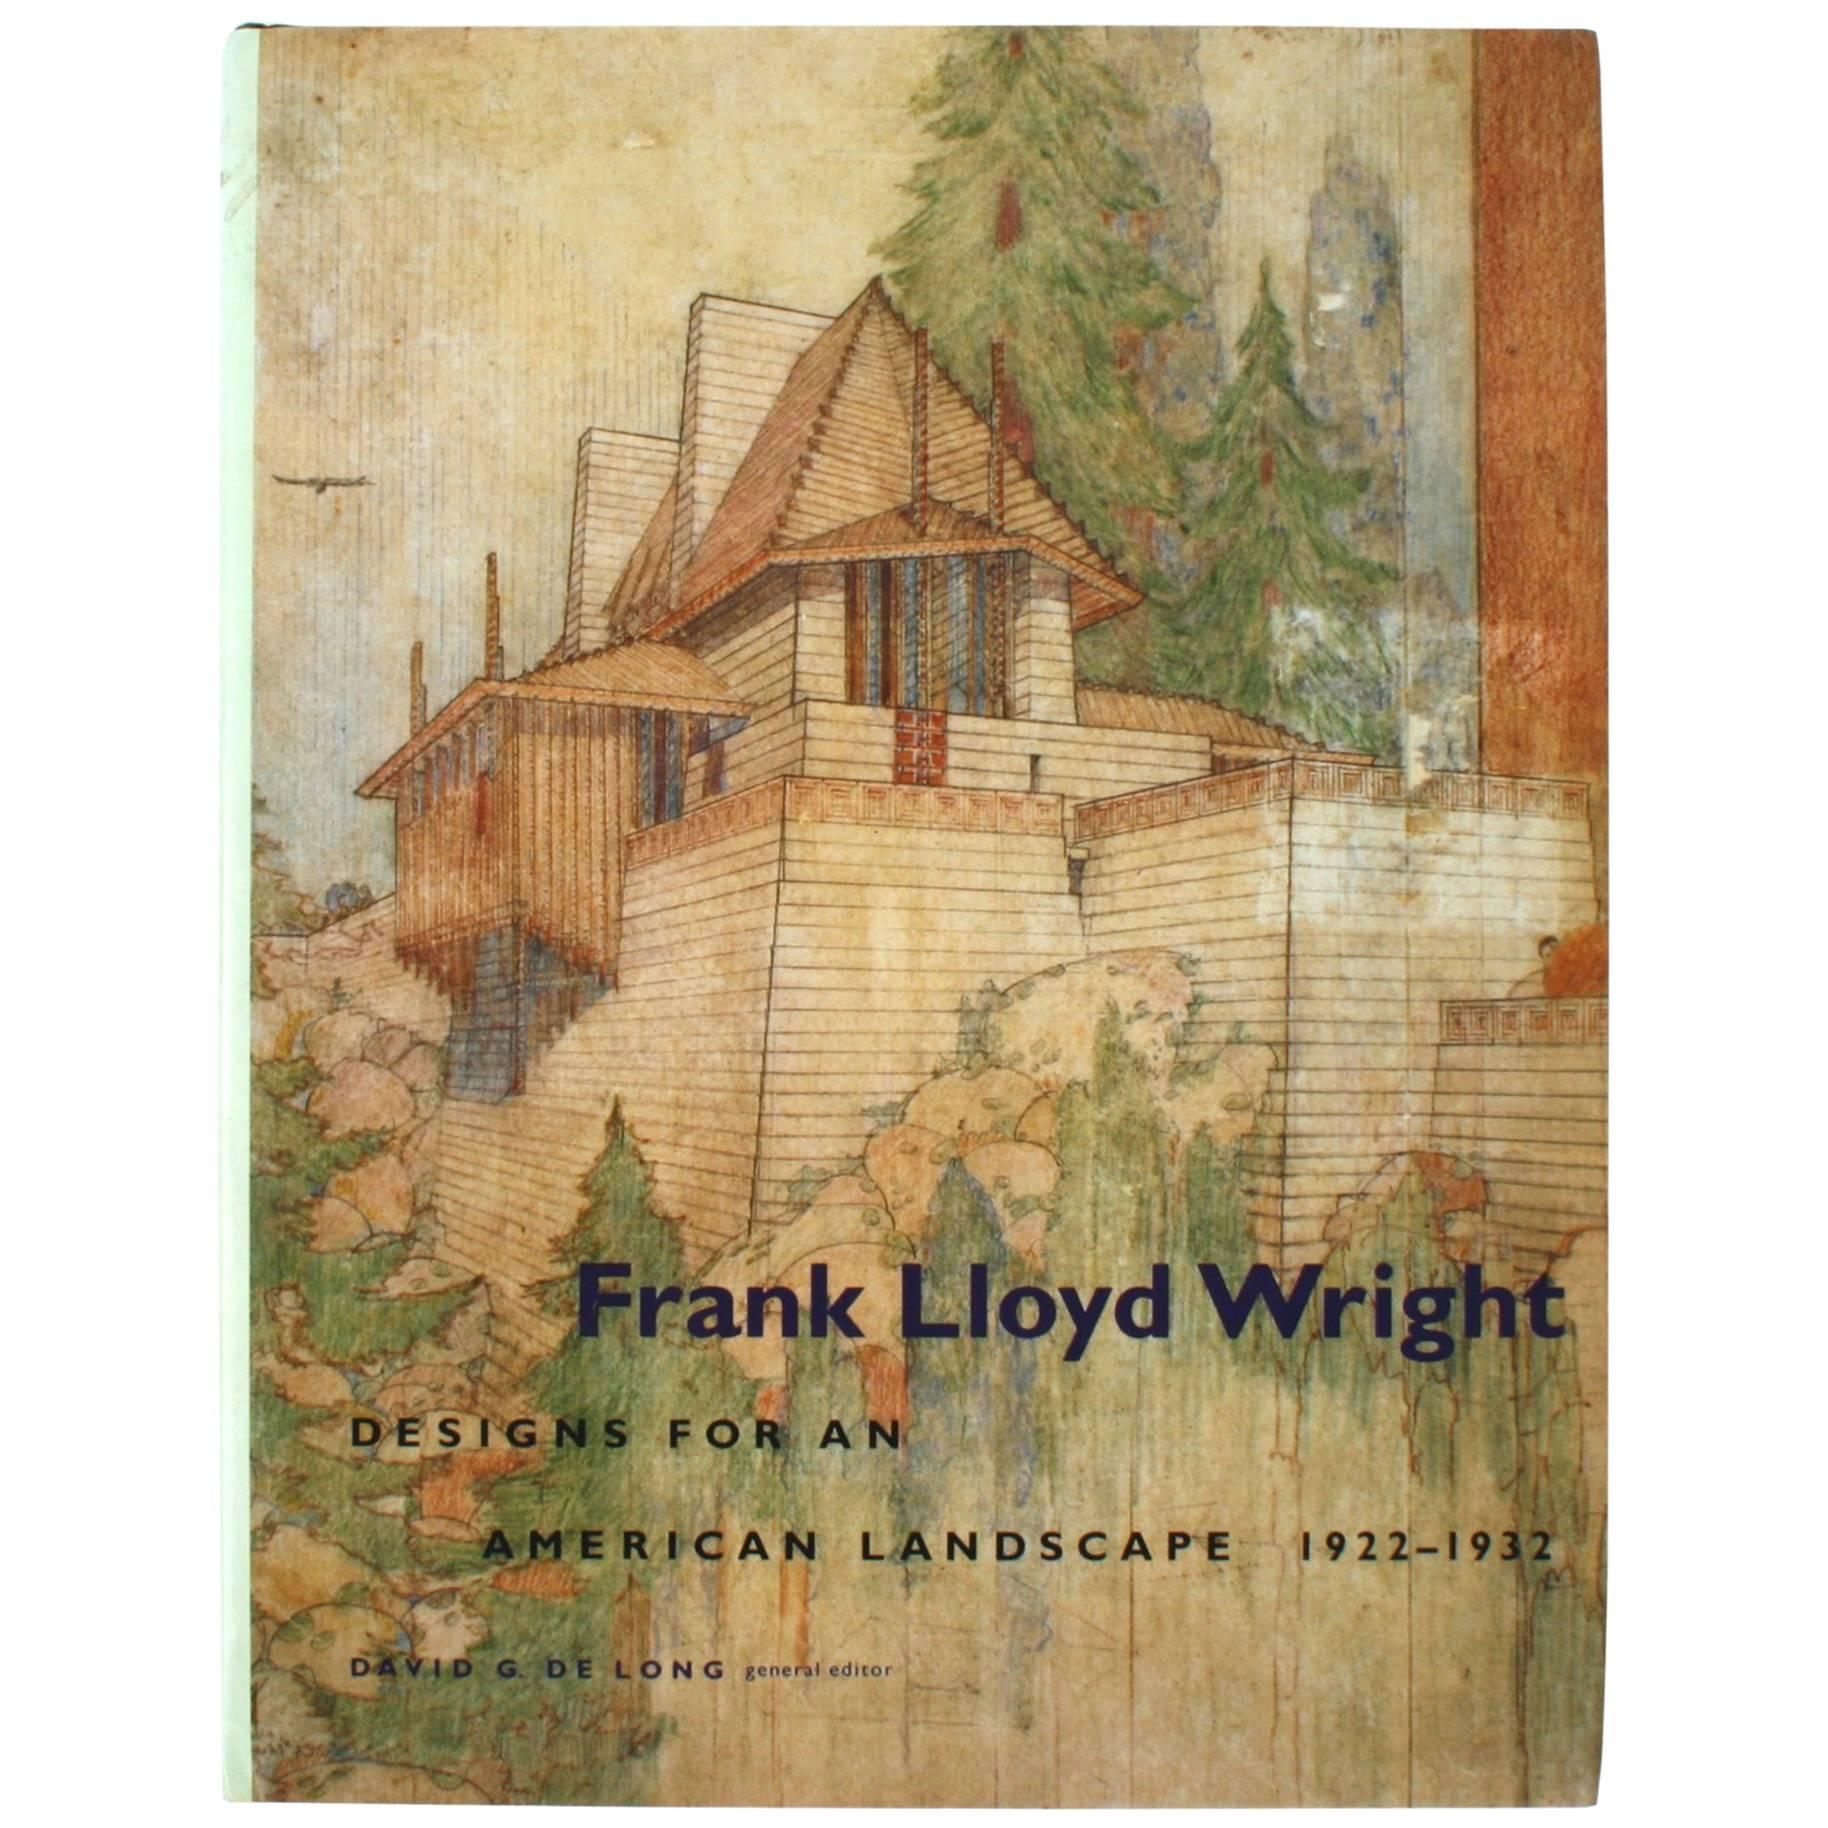 Frank Lloyd Wright, Designs for an American Landscape, 1922-1932, 1st Edition